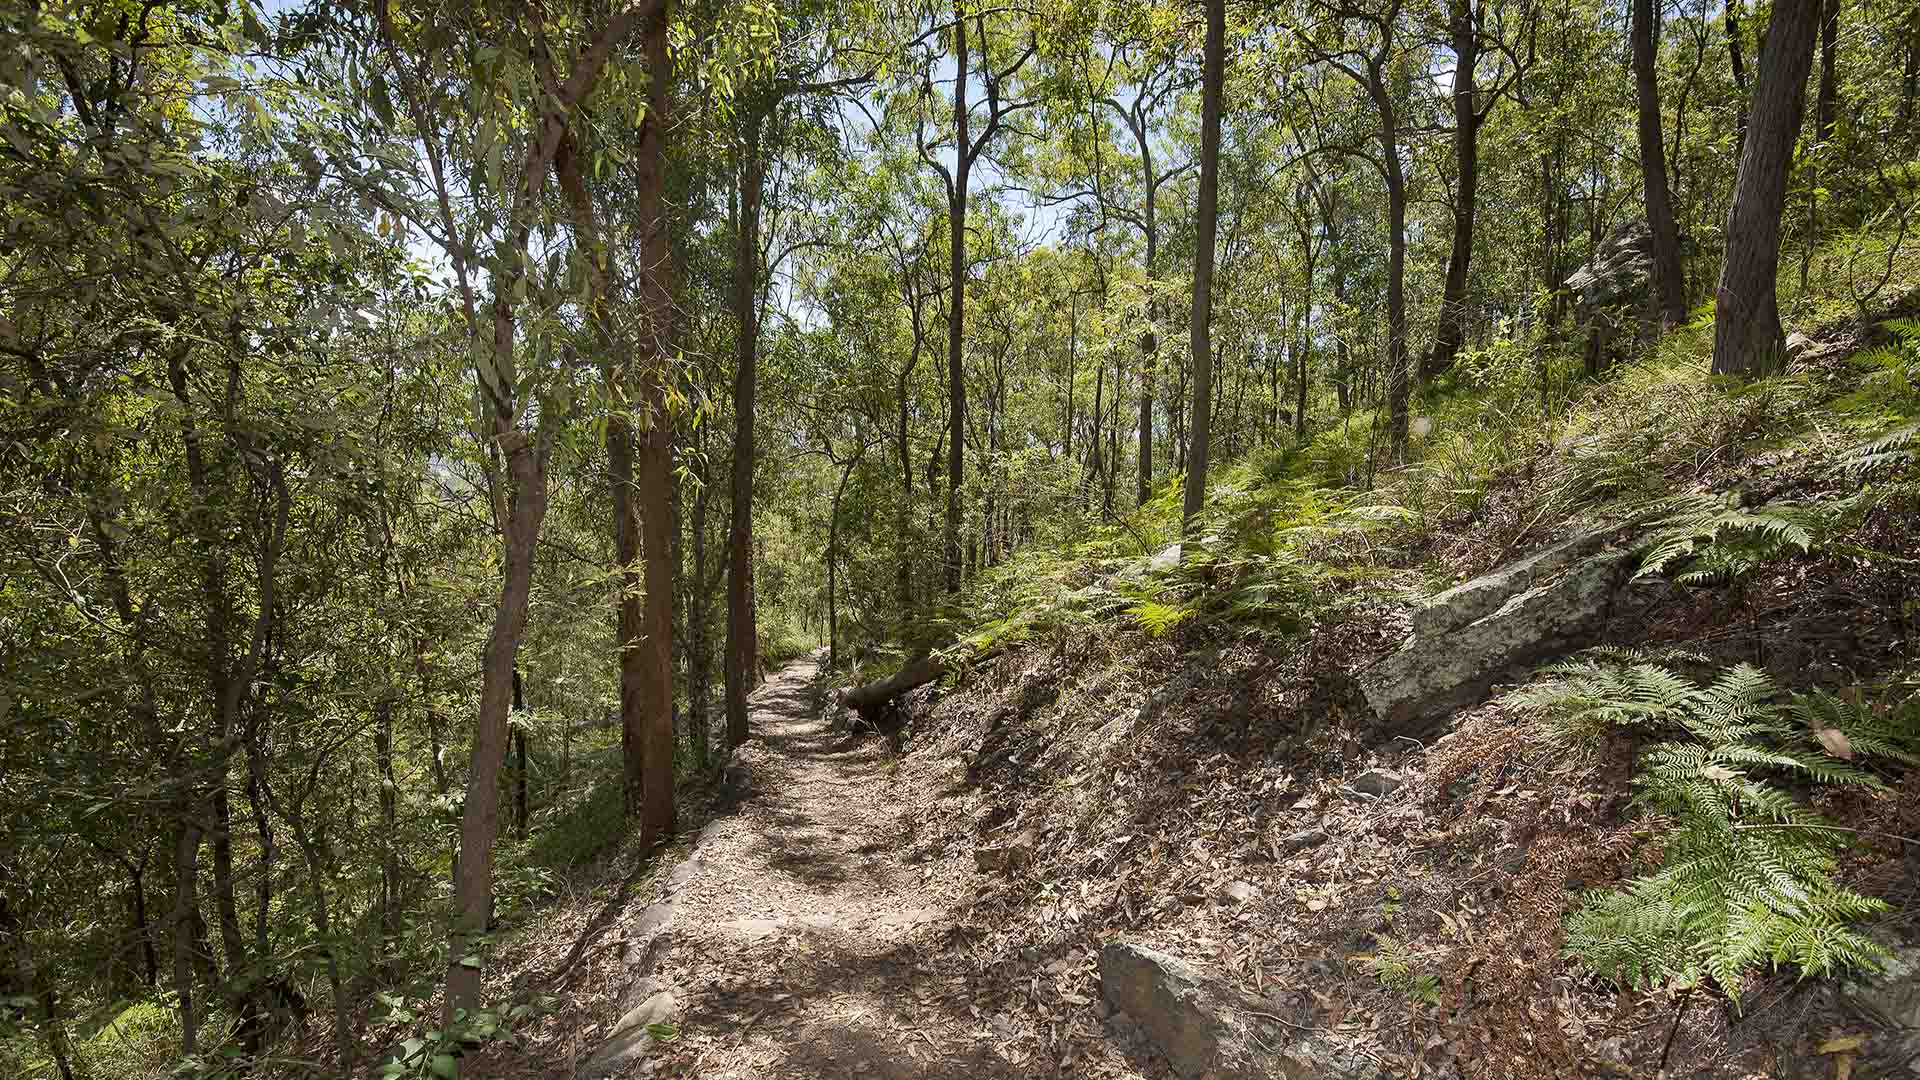 MOUNT GRAVATT OUTLOOK RESERVE - one of the best Queensland hiking trails